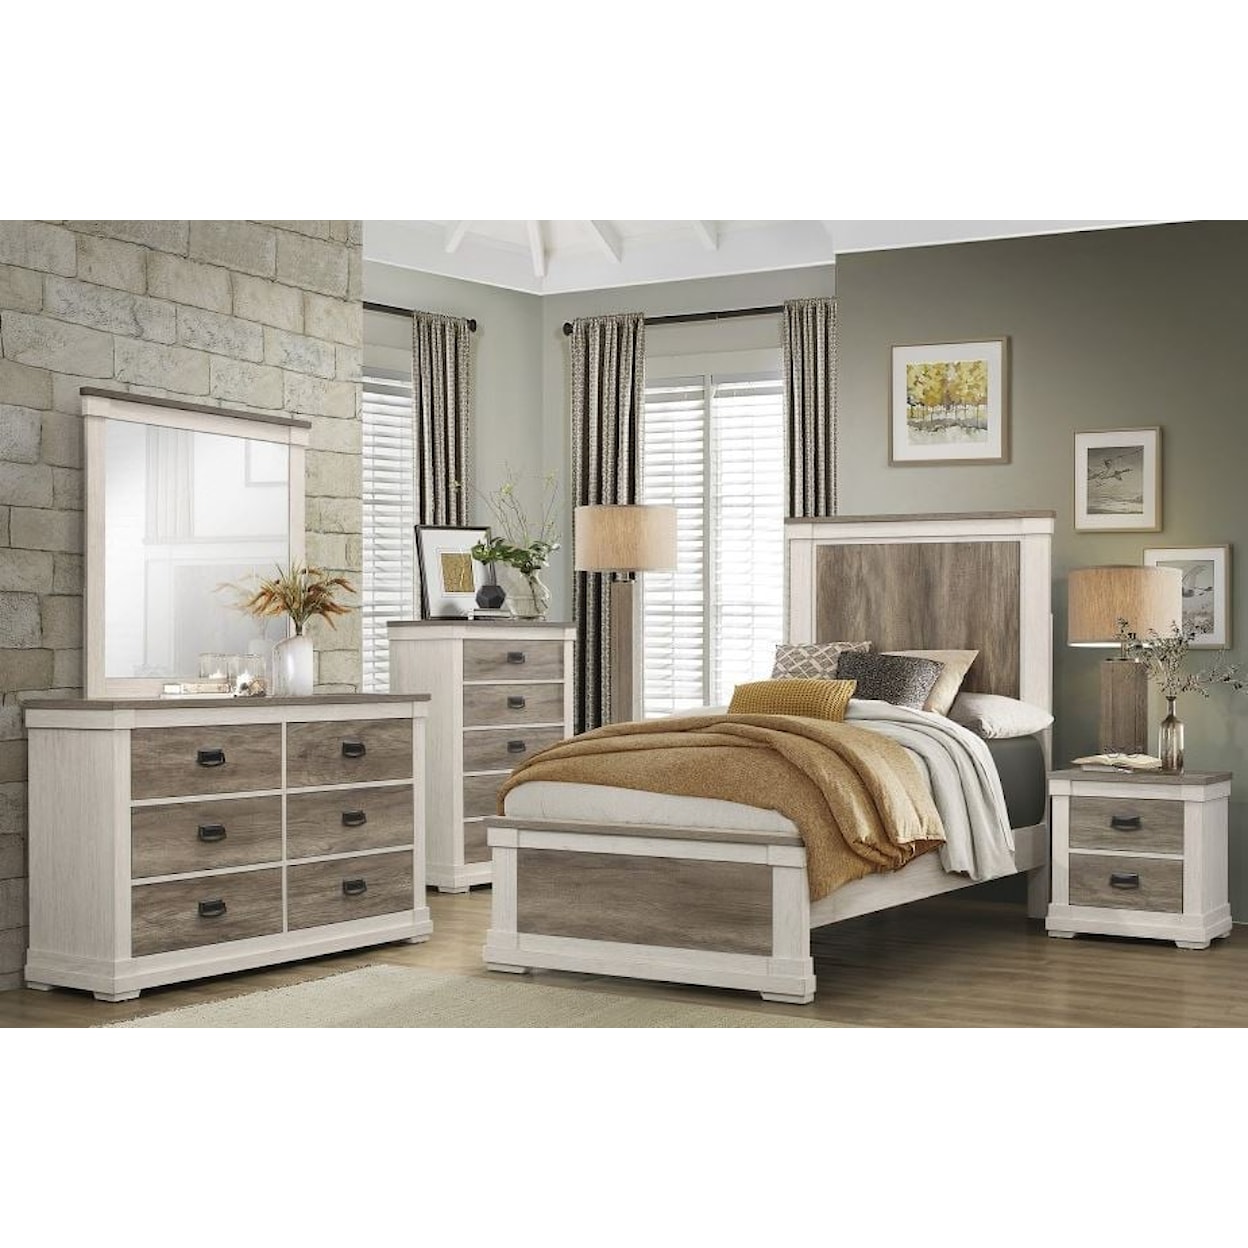 Homelegance Furniture Arcadia Bedroom Groups